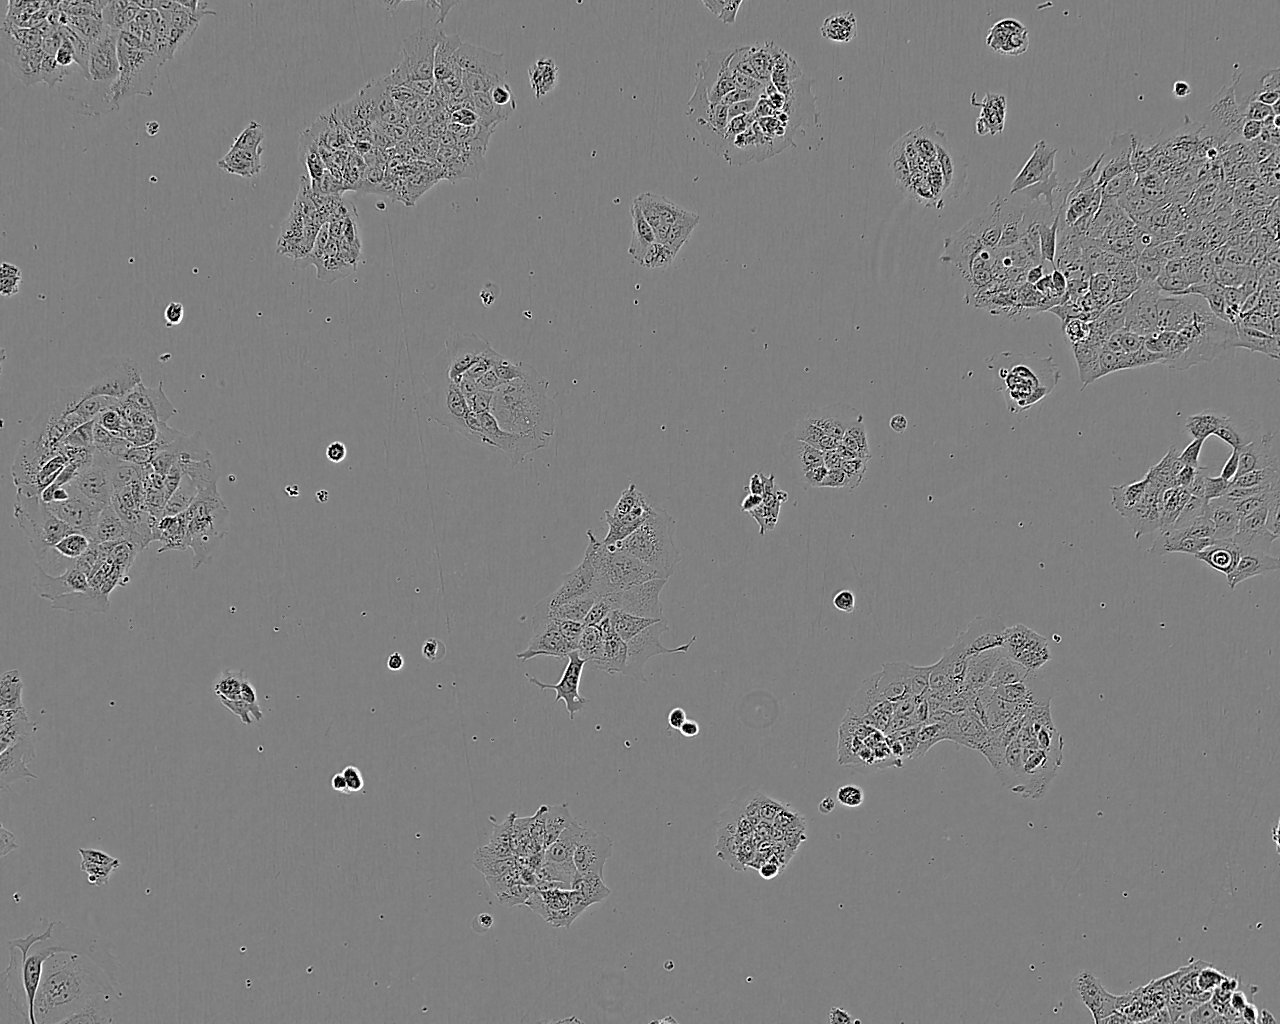 AD-293 人胚肾细胞系